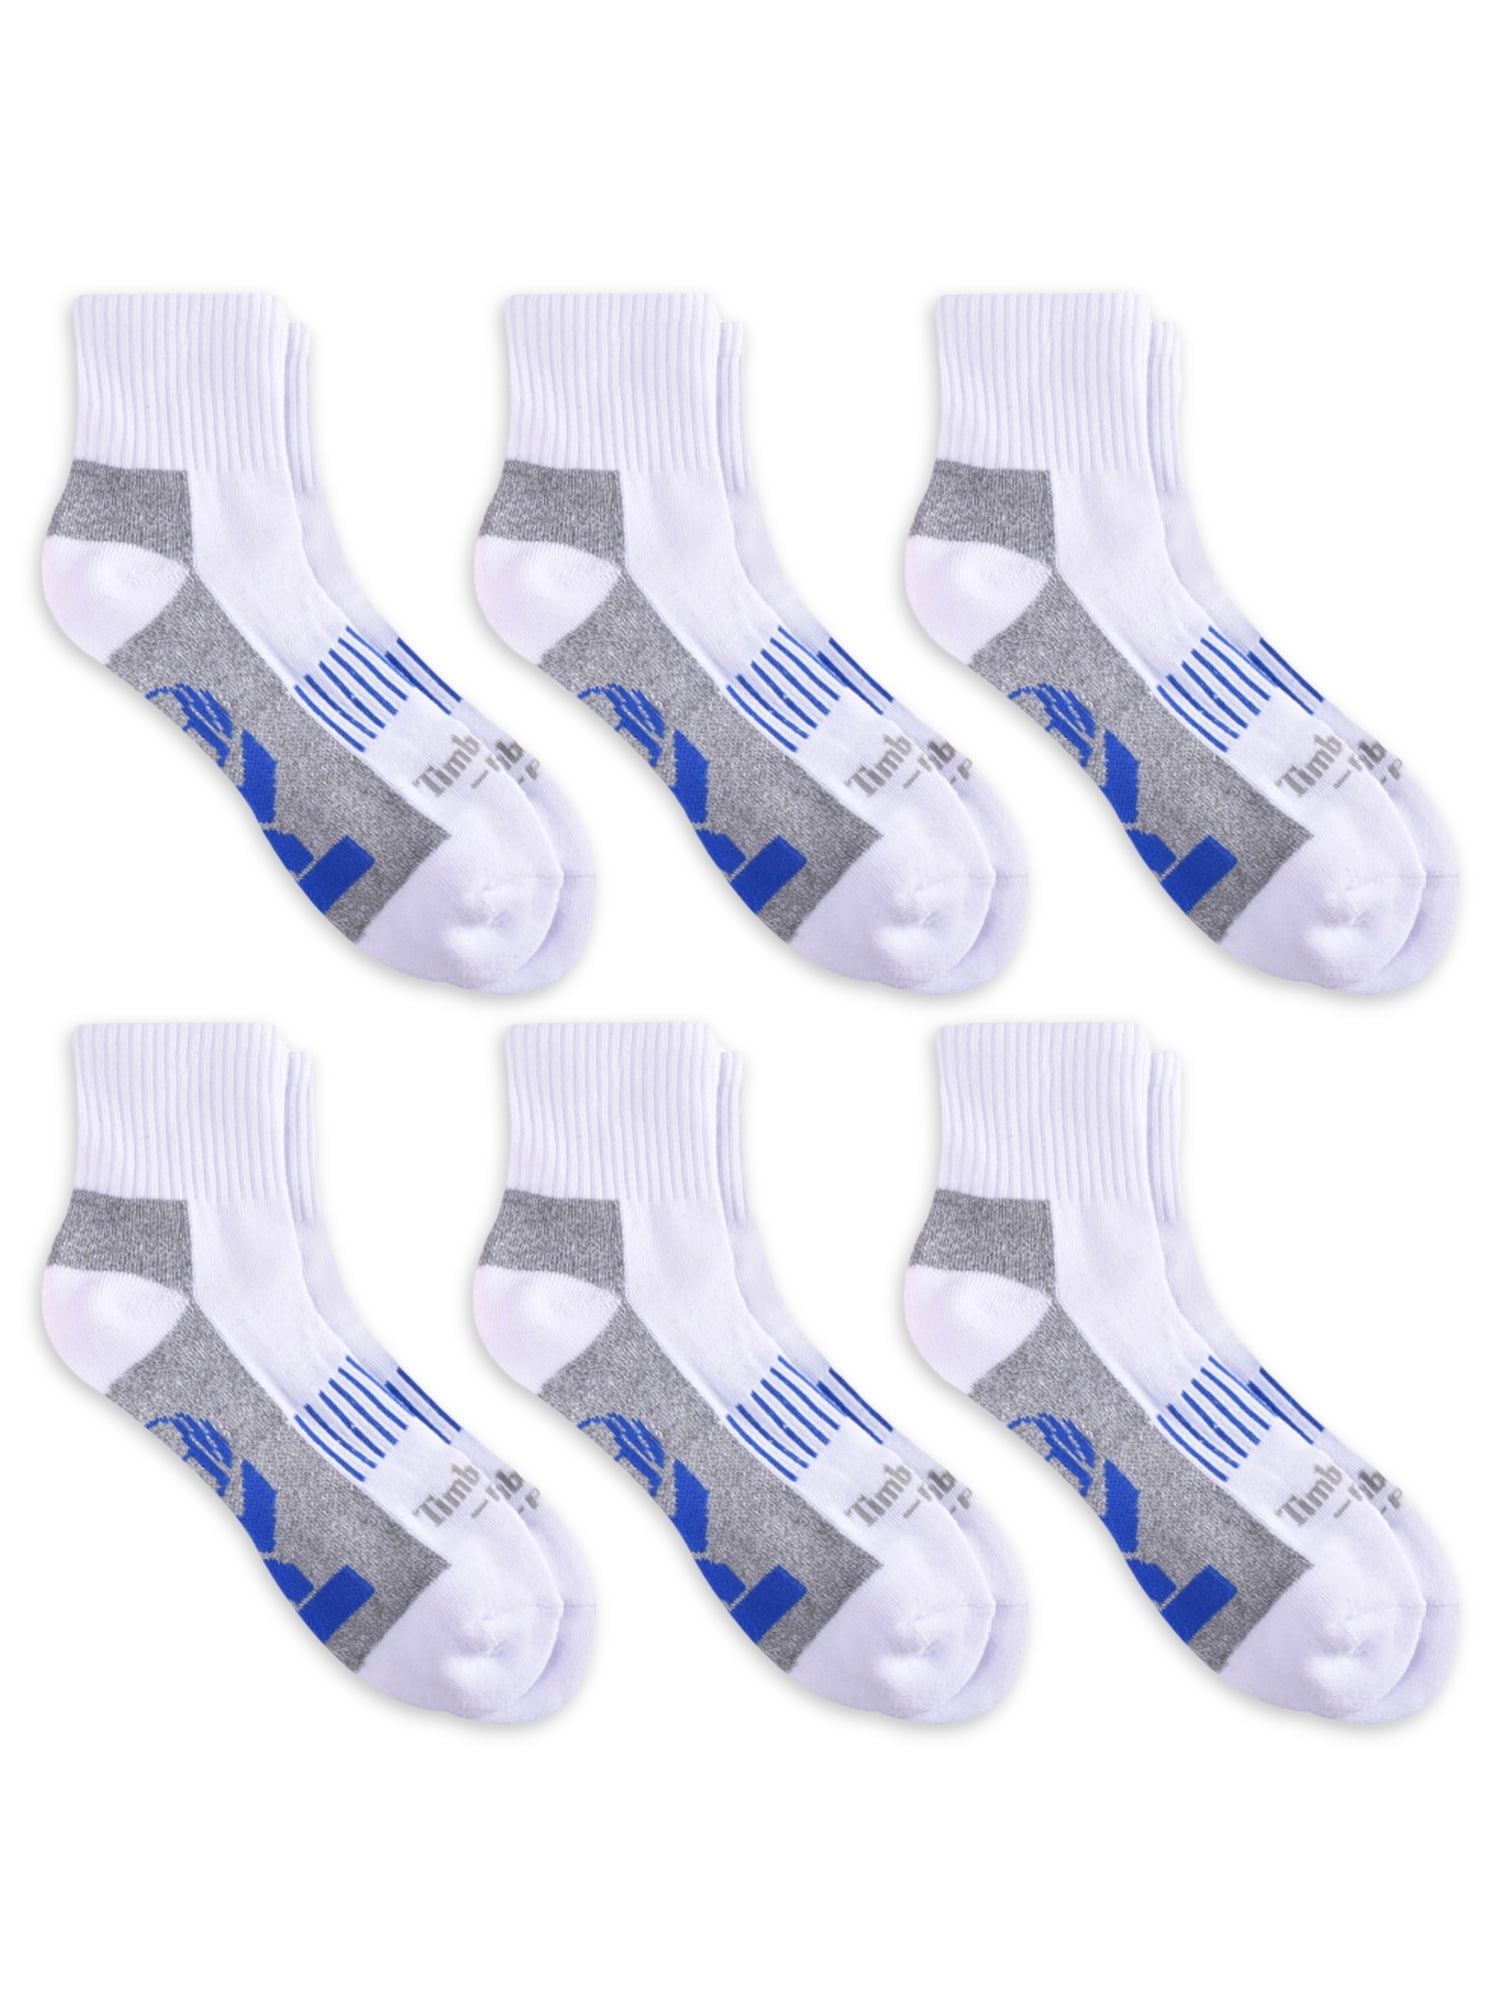 6-Pair Timberland Pro Men's Cushioned Quarter Socks $8.70 ($1.45 each pair) + Free Shipping w/ Walmart+ or $35+